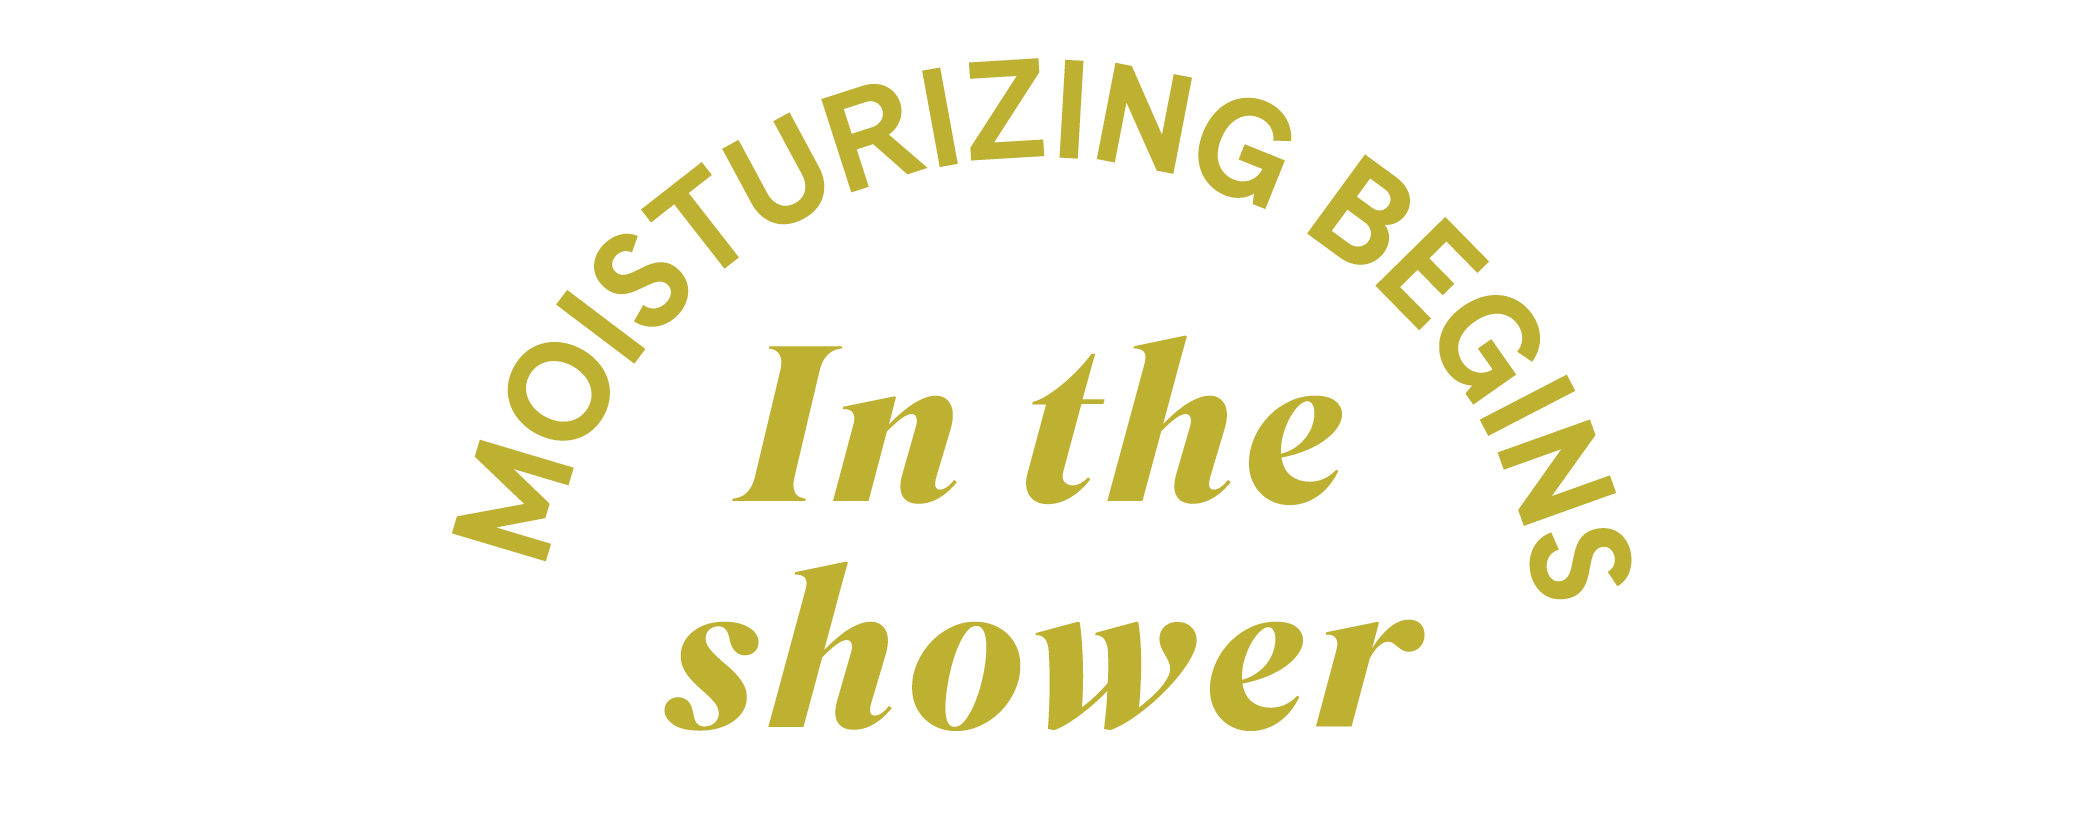 Moisturizing begins in the shower